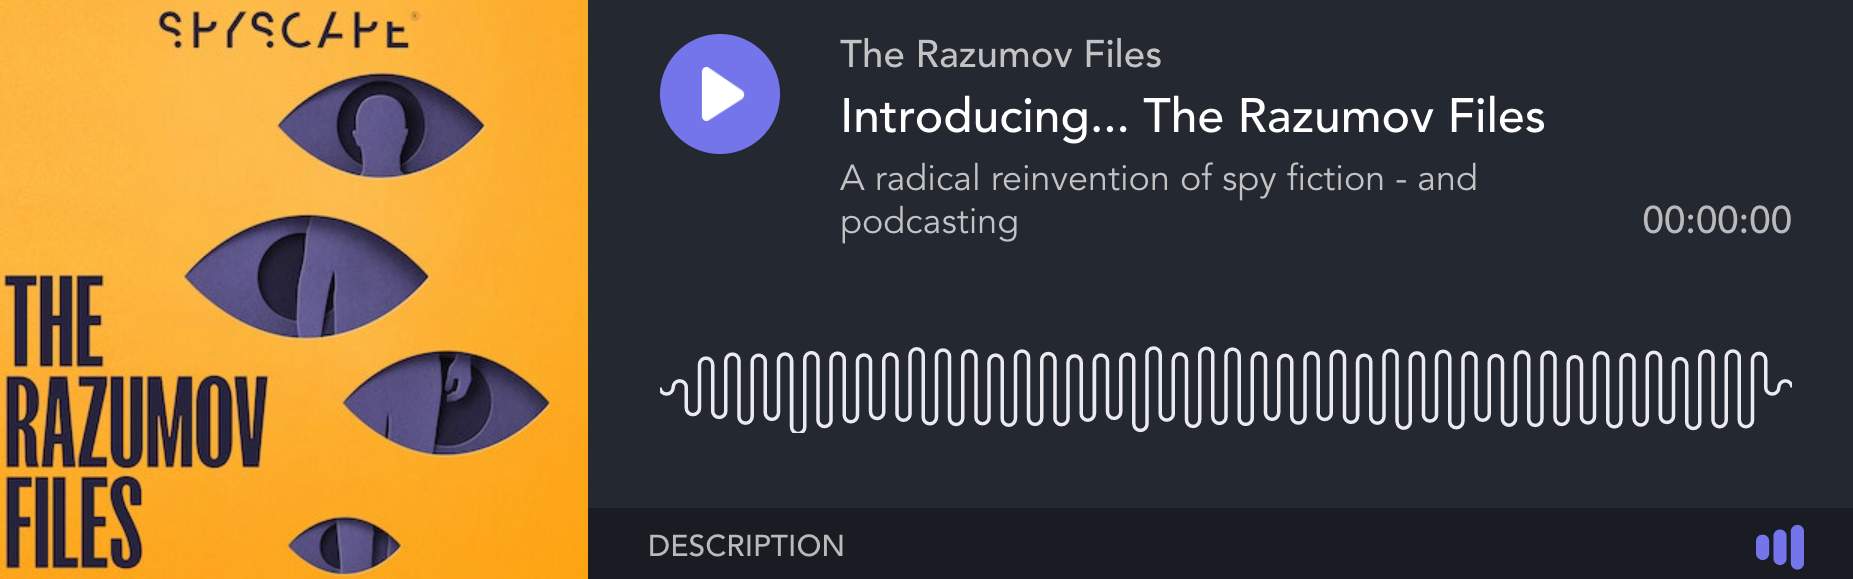 The Razumov Files podcast